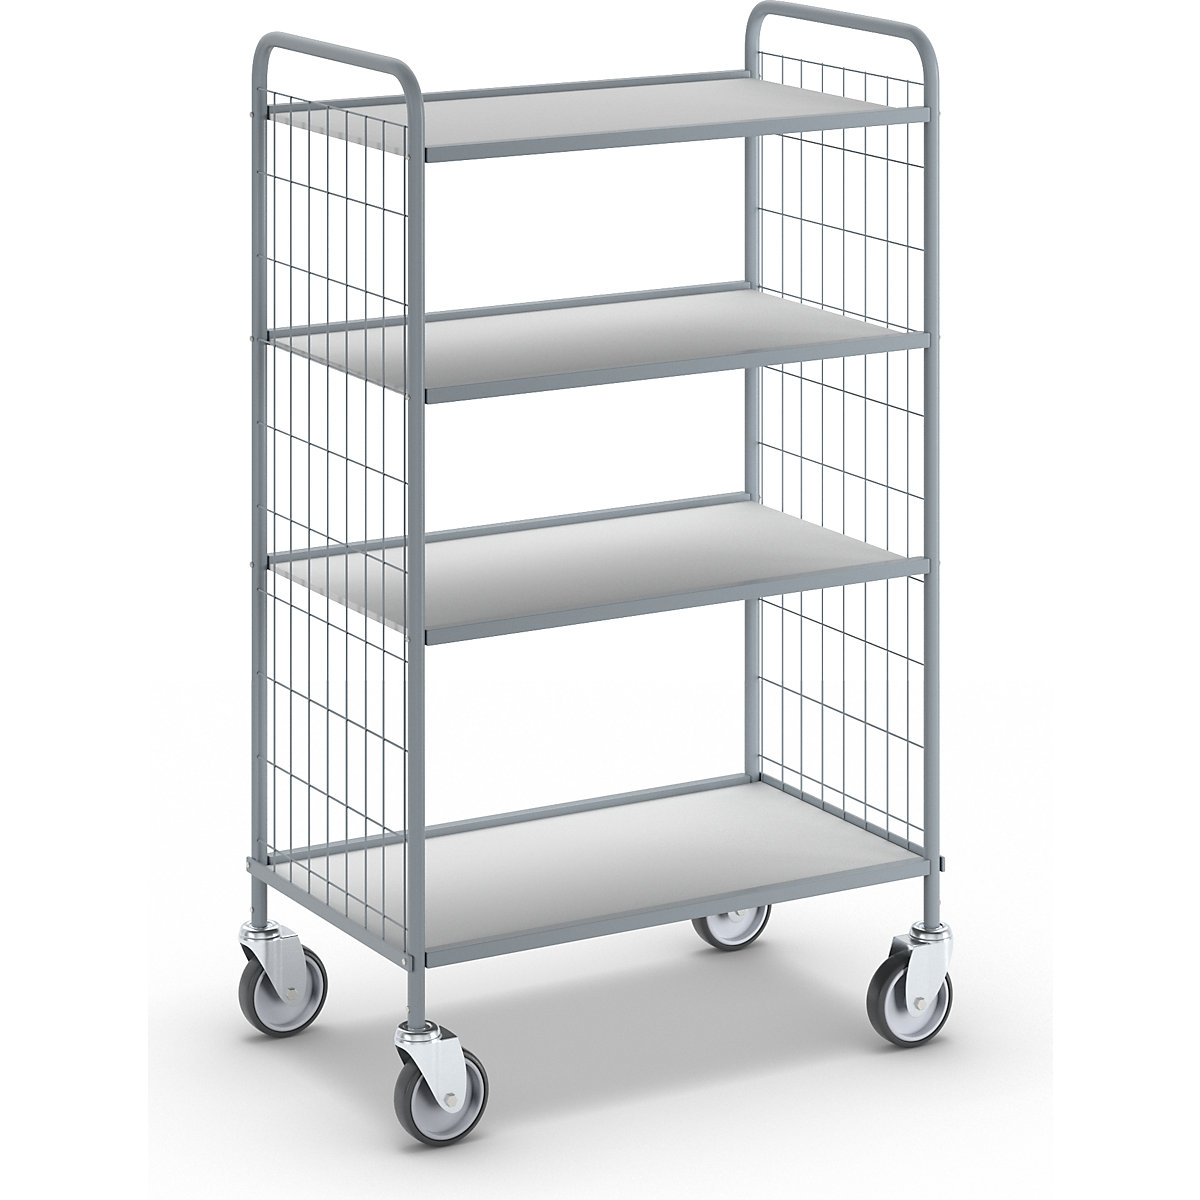 Office shelf trolley, max. load 150 kg, shelves / panels plastic coated in light grey, 4 shelves, 4 swivel castors-2